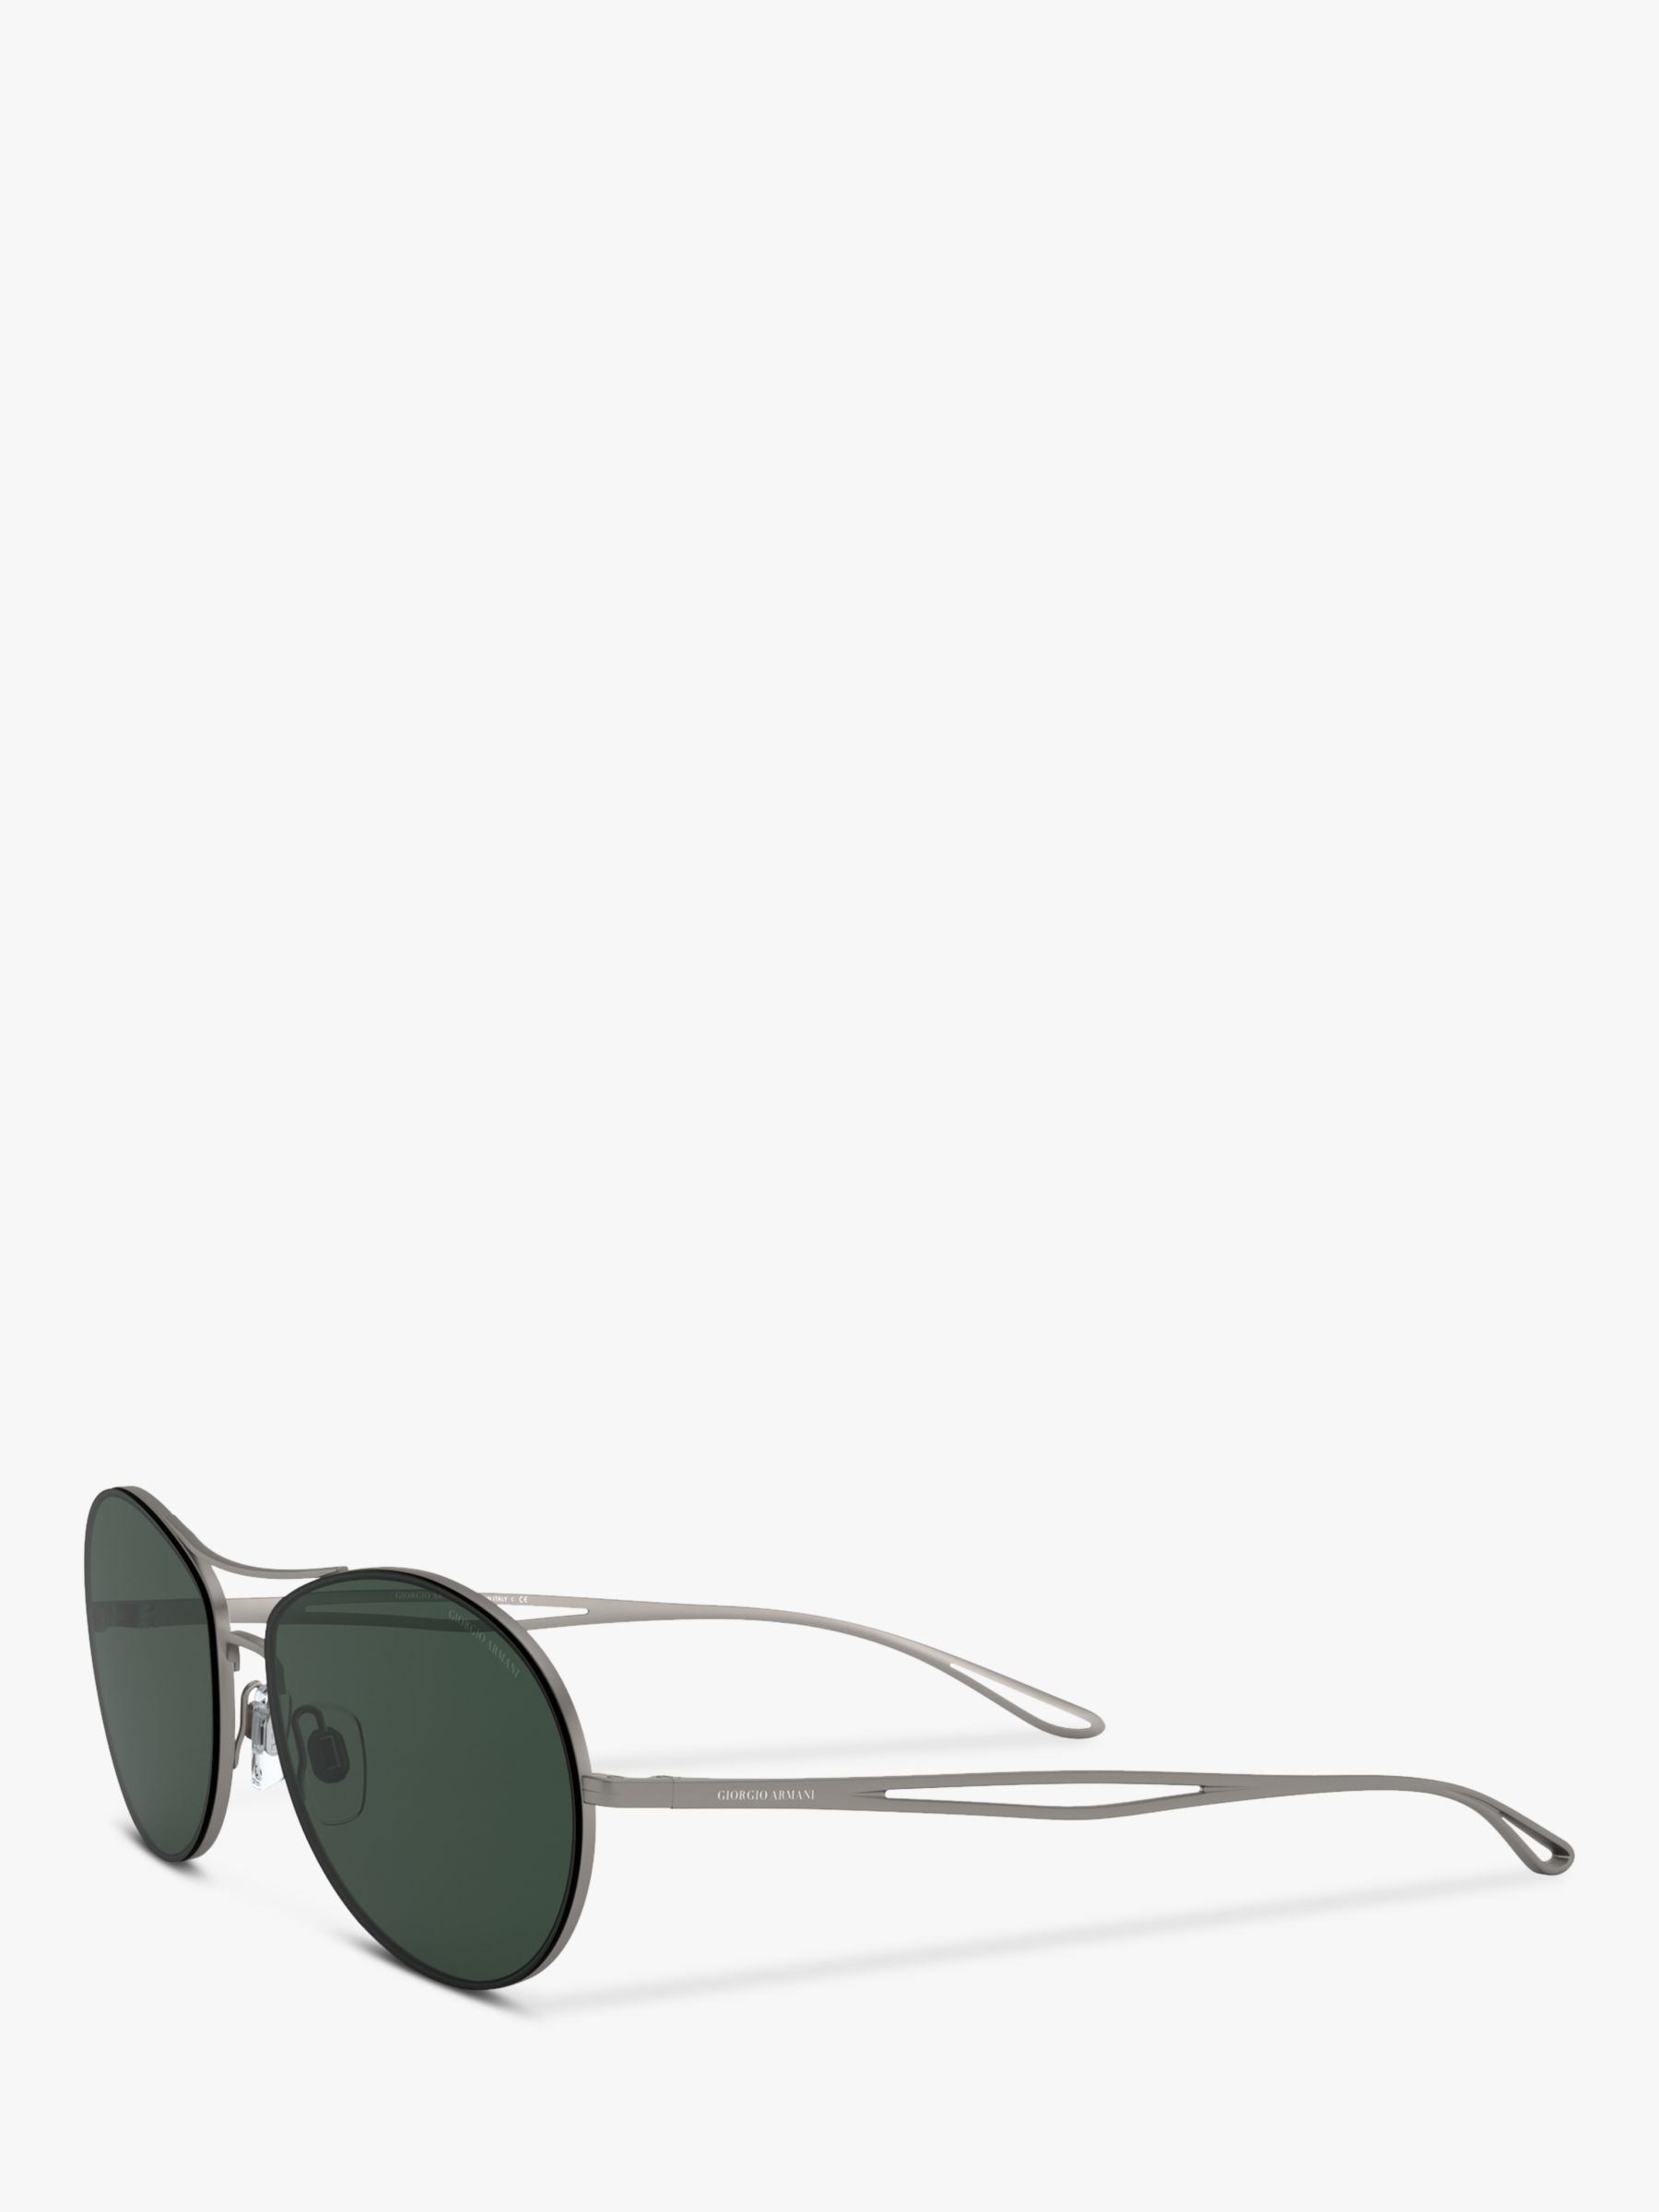 Giorgio Armani AR6099 Men's Aviator Sunglasses, Matte Gunmetal/Dark Green  at John Lewis & Partners